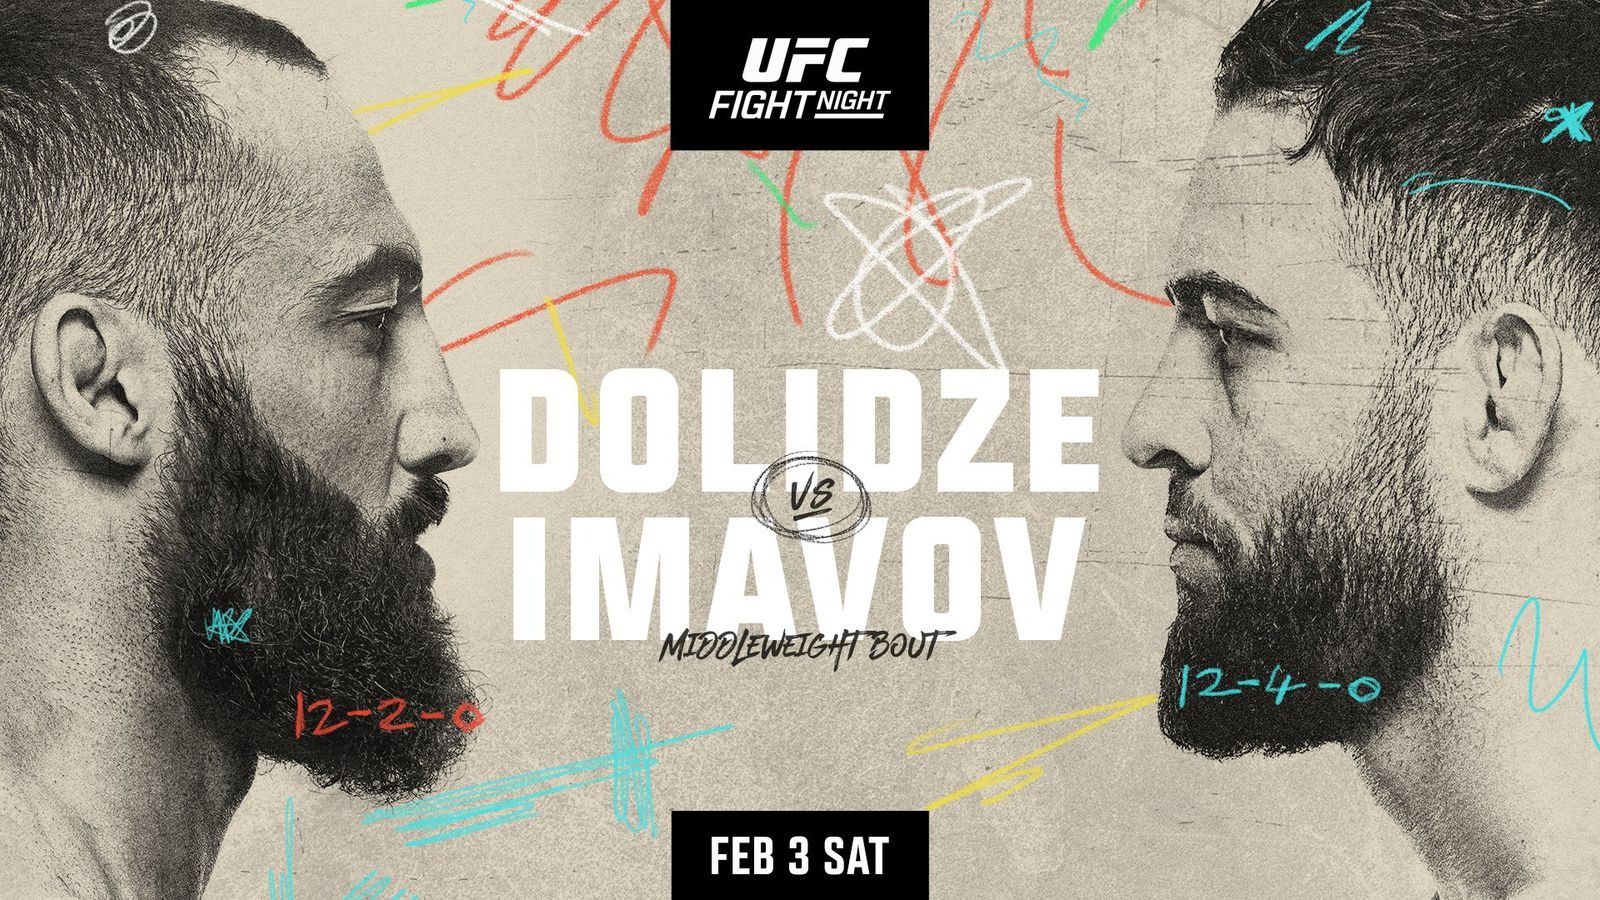 Imavov vs. Dolidze fight to headline UFC Vegas 85 event